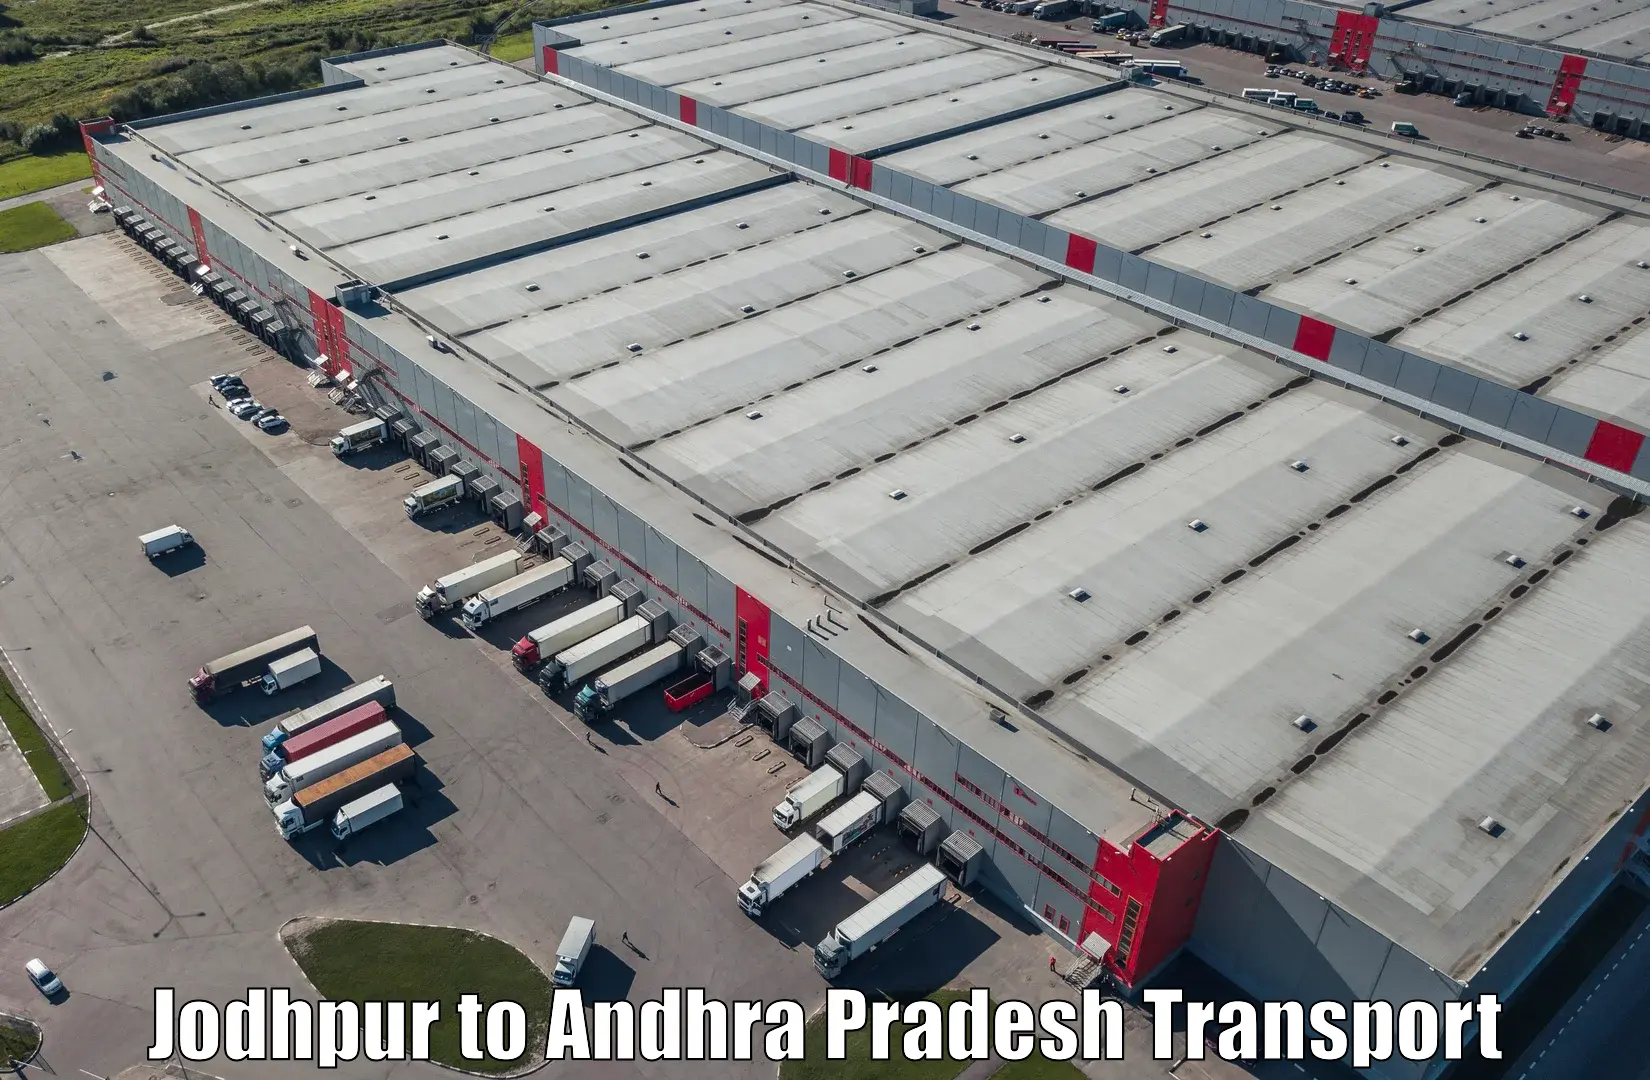 Transport in sharing Jodhpur to Srikakulam